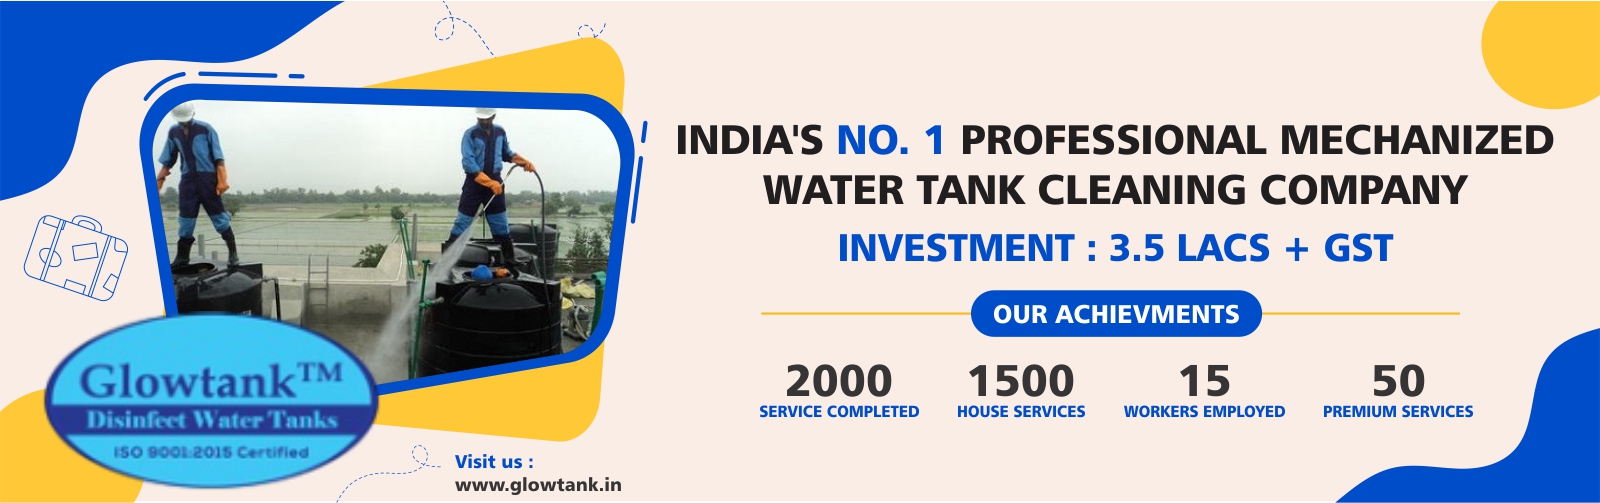 admin/uploads/brand_registration/Glowtank - Fastest Growing Professional Mechanized Water Tank Cleaning Company 